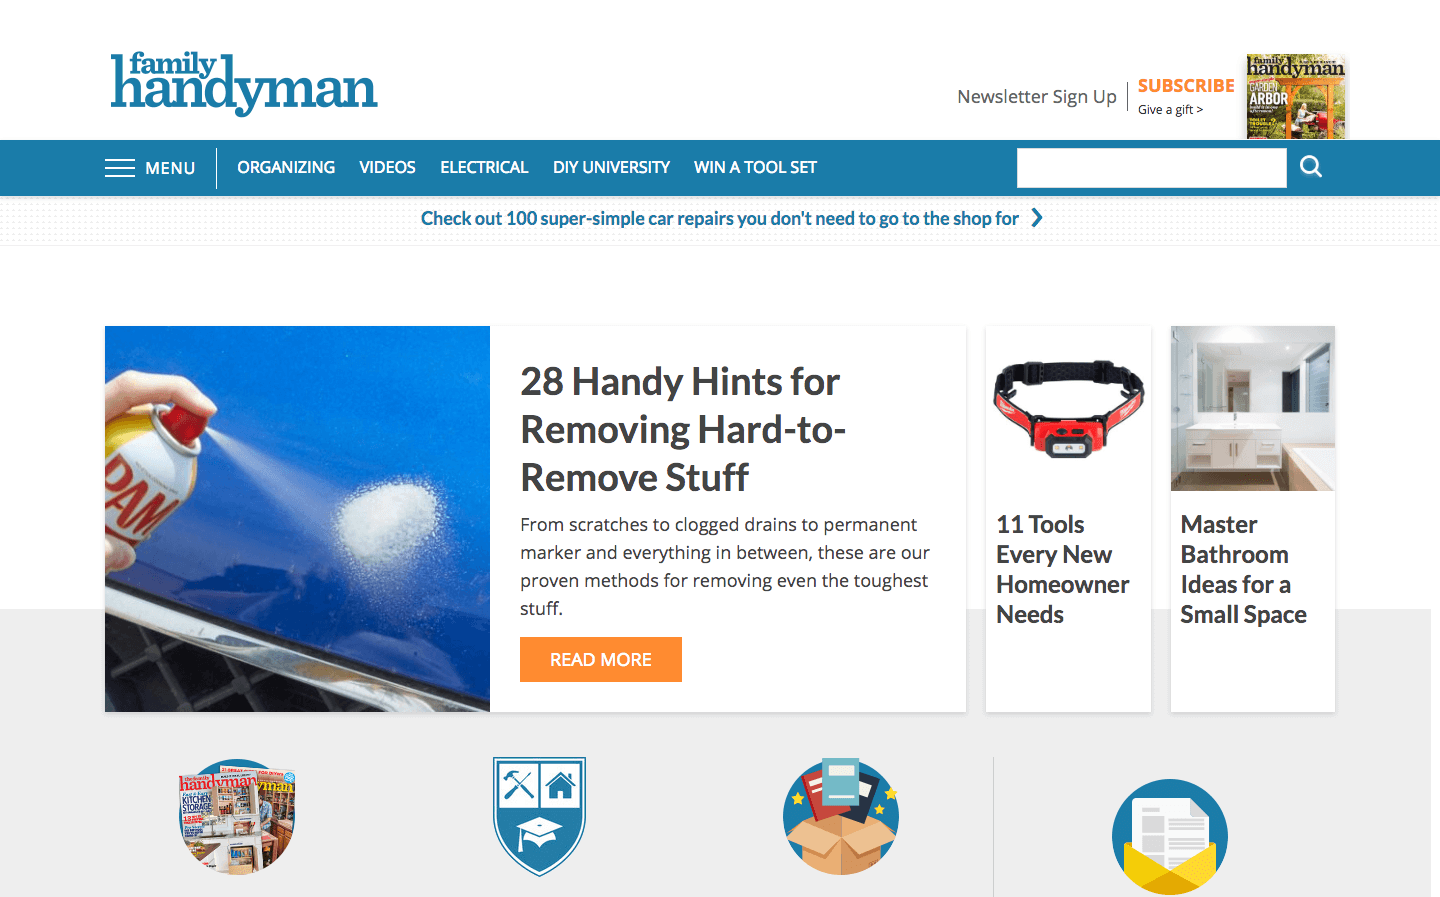 The Family Handyman homepage